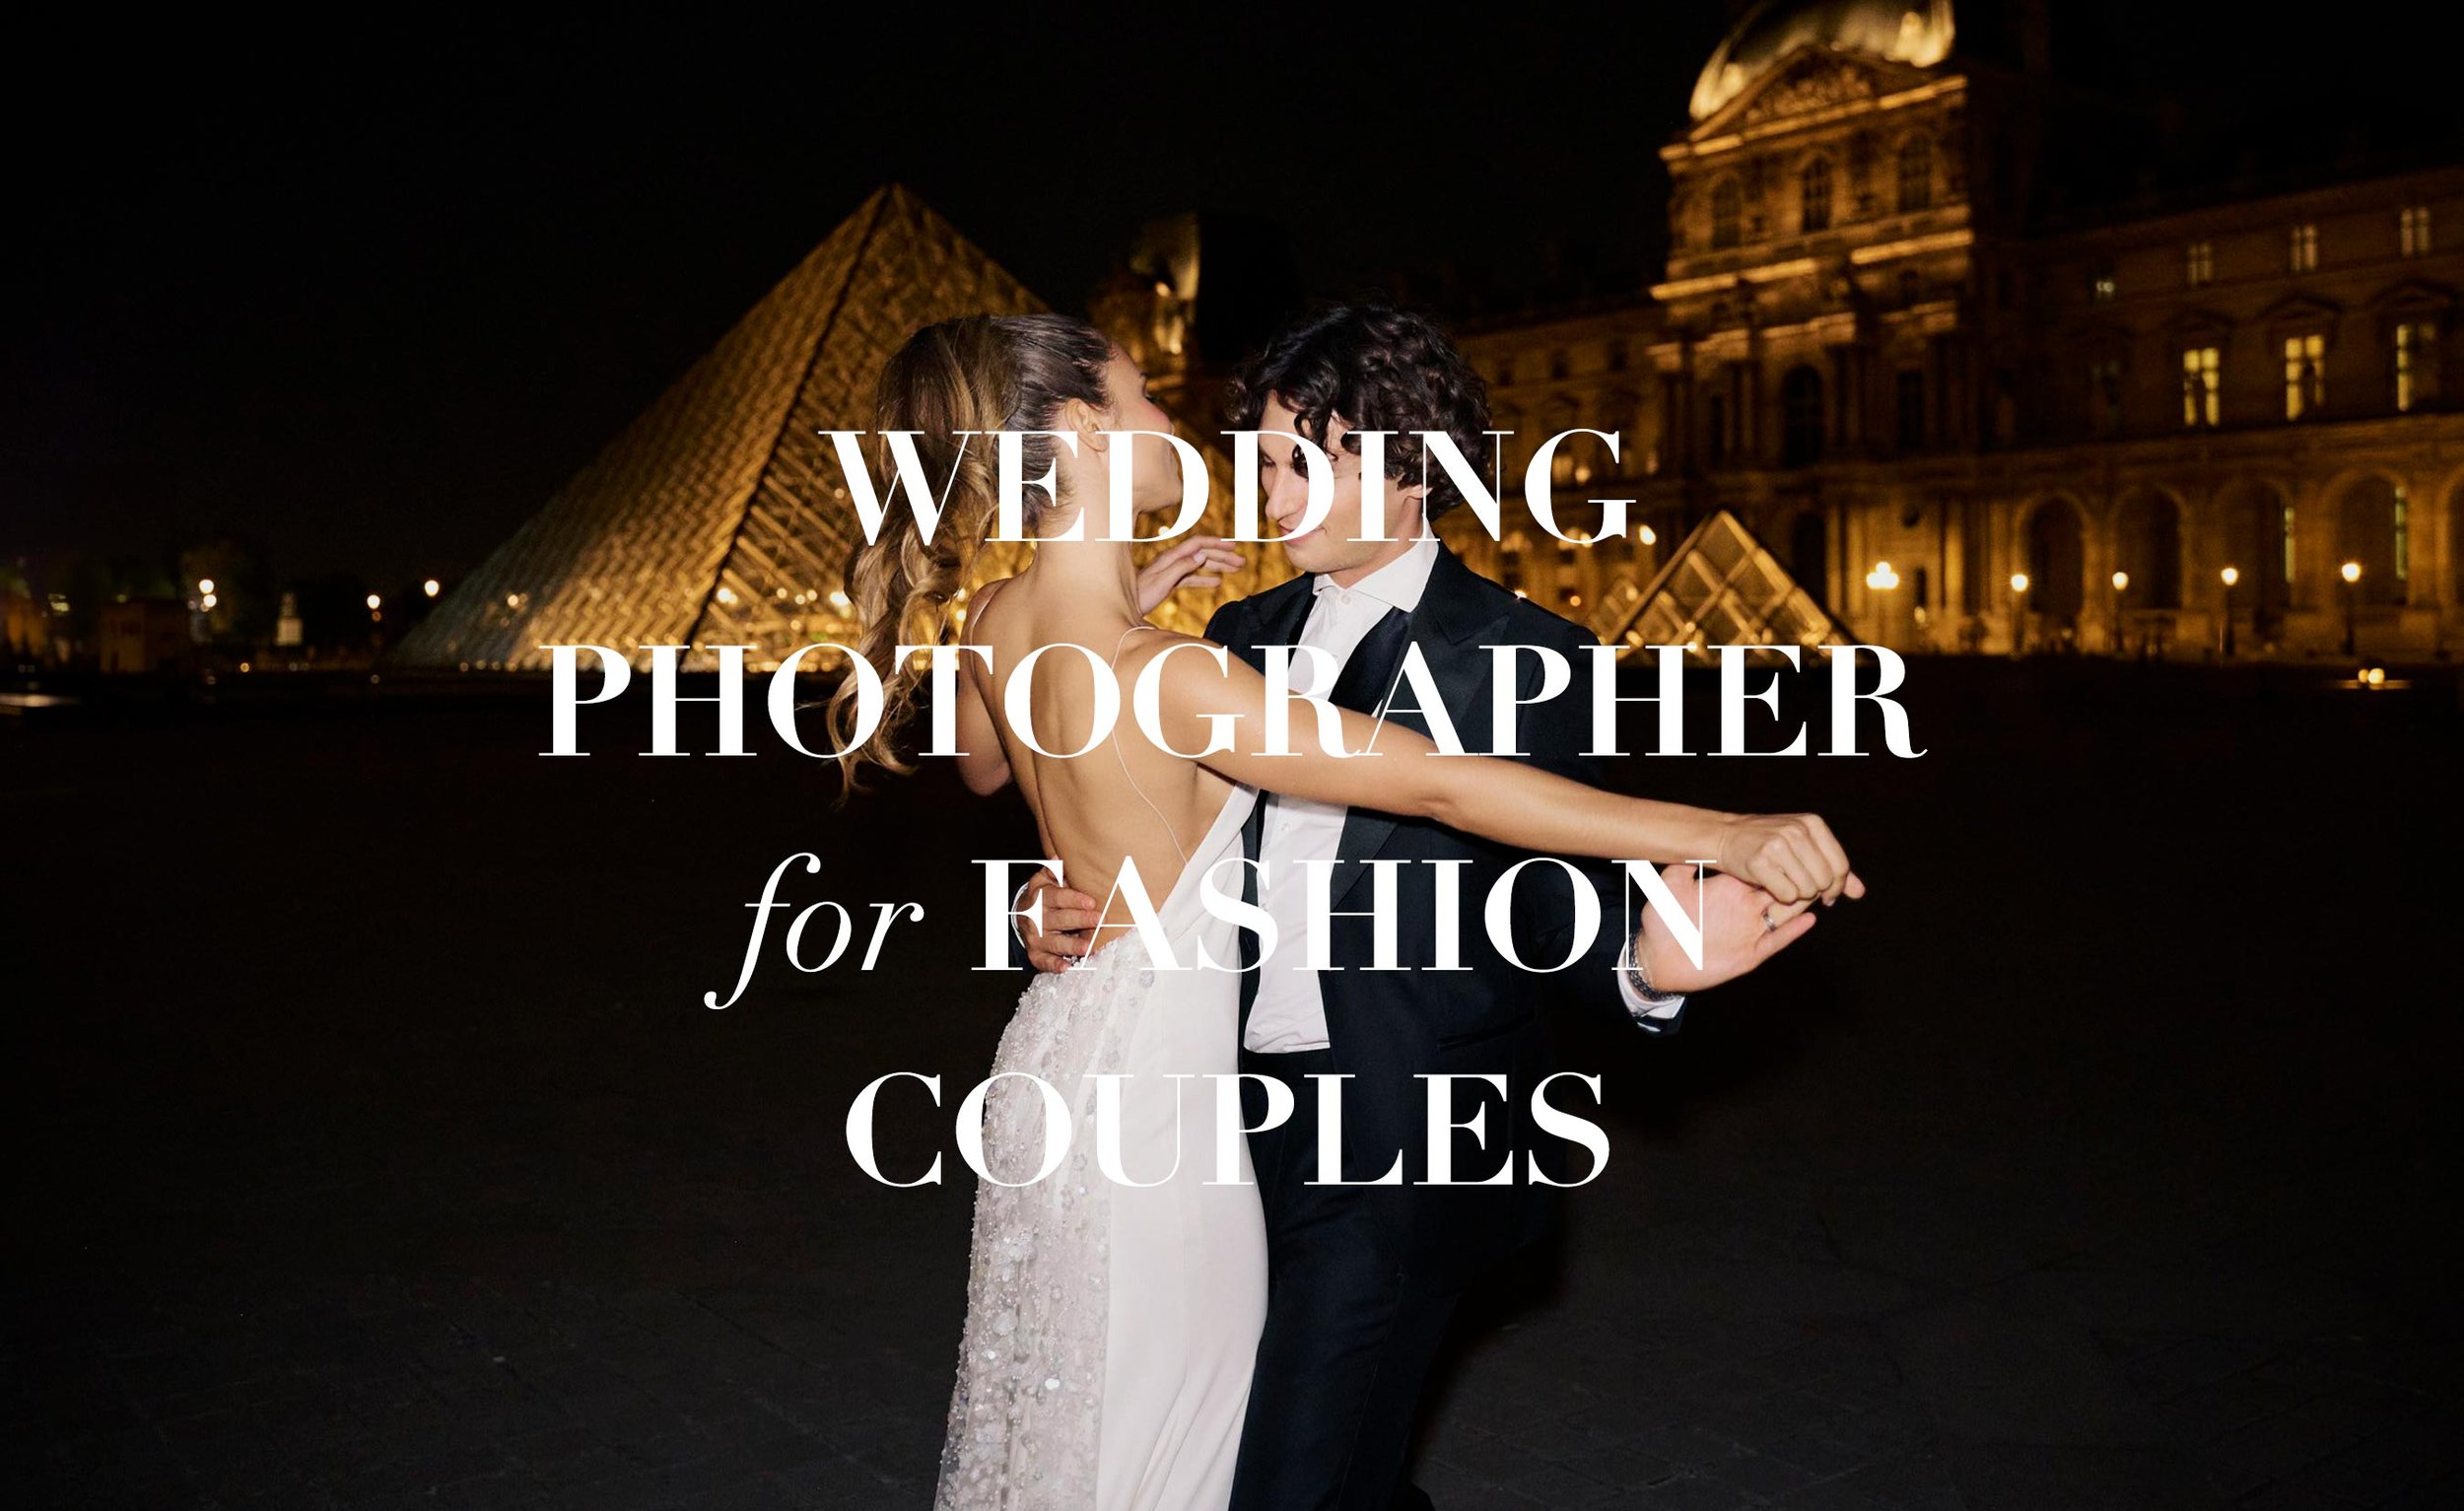 David_picchio_fashion_wedding_photographer_couple_paris_france_elopment_homepage_05a.jpg